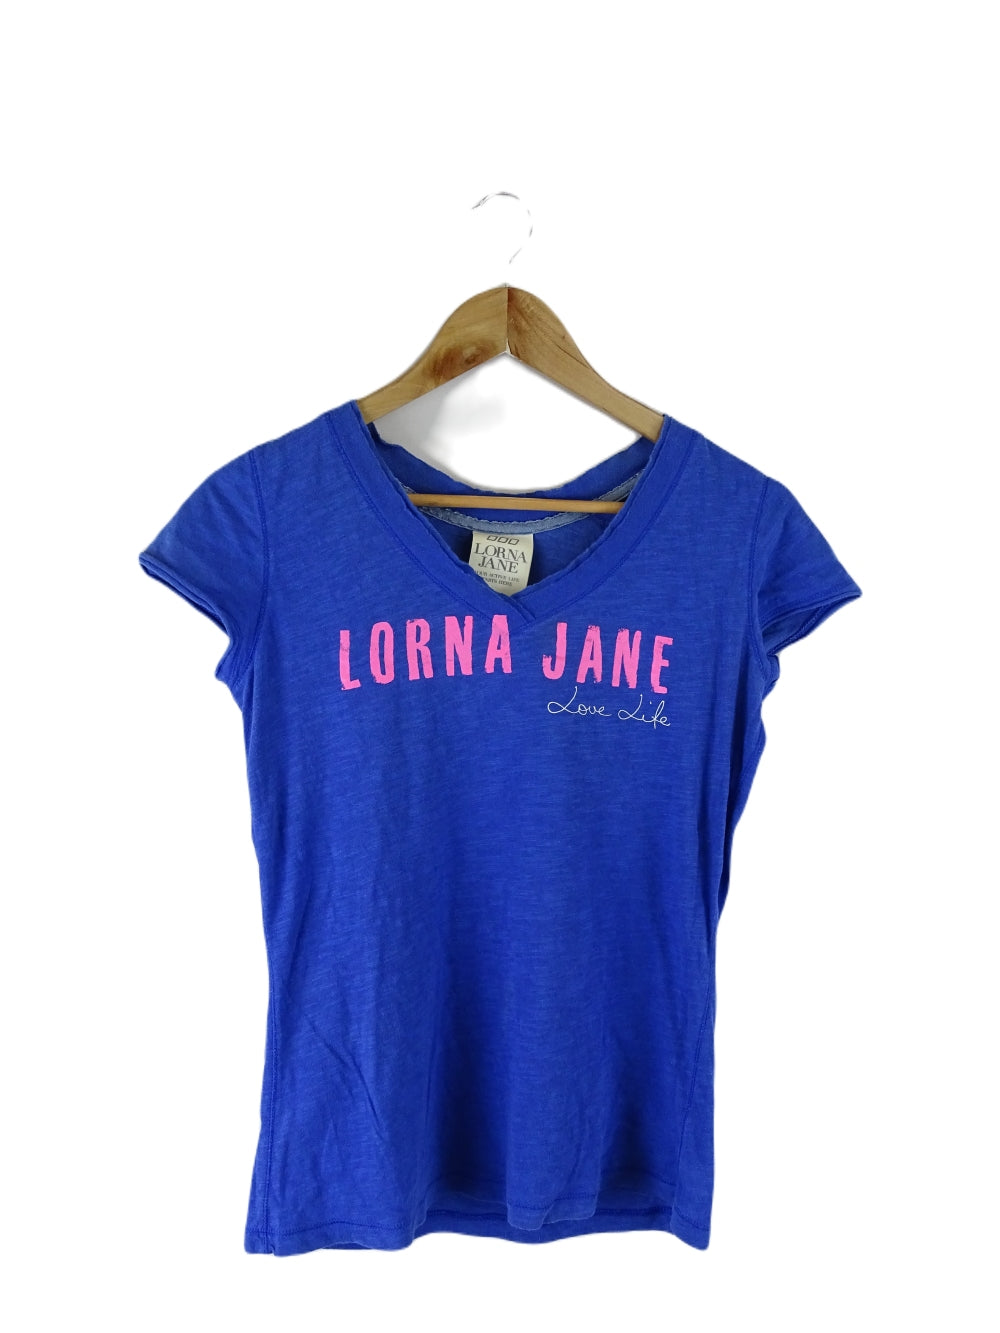 Lorna Jane Blue T-shirt S